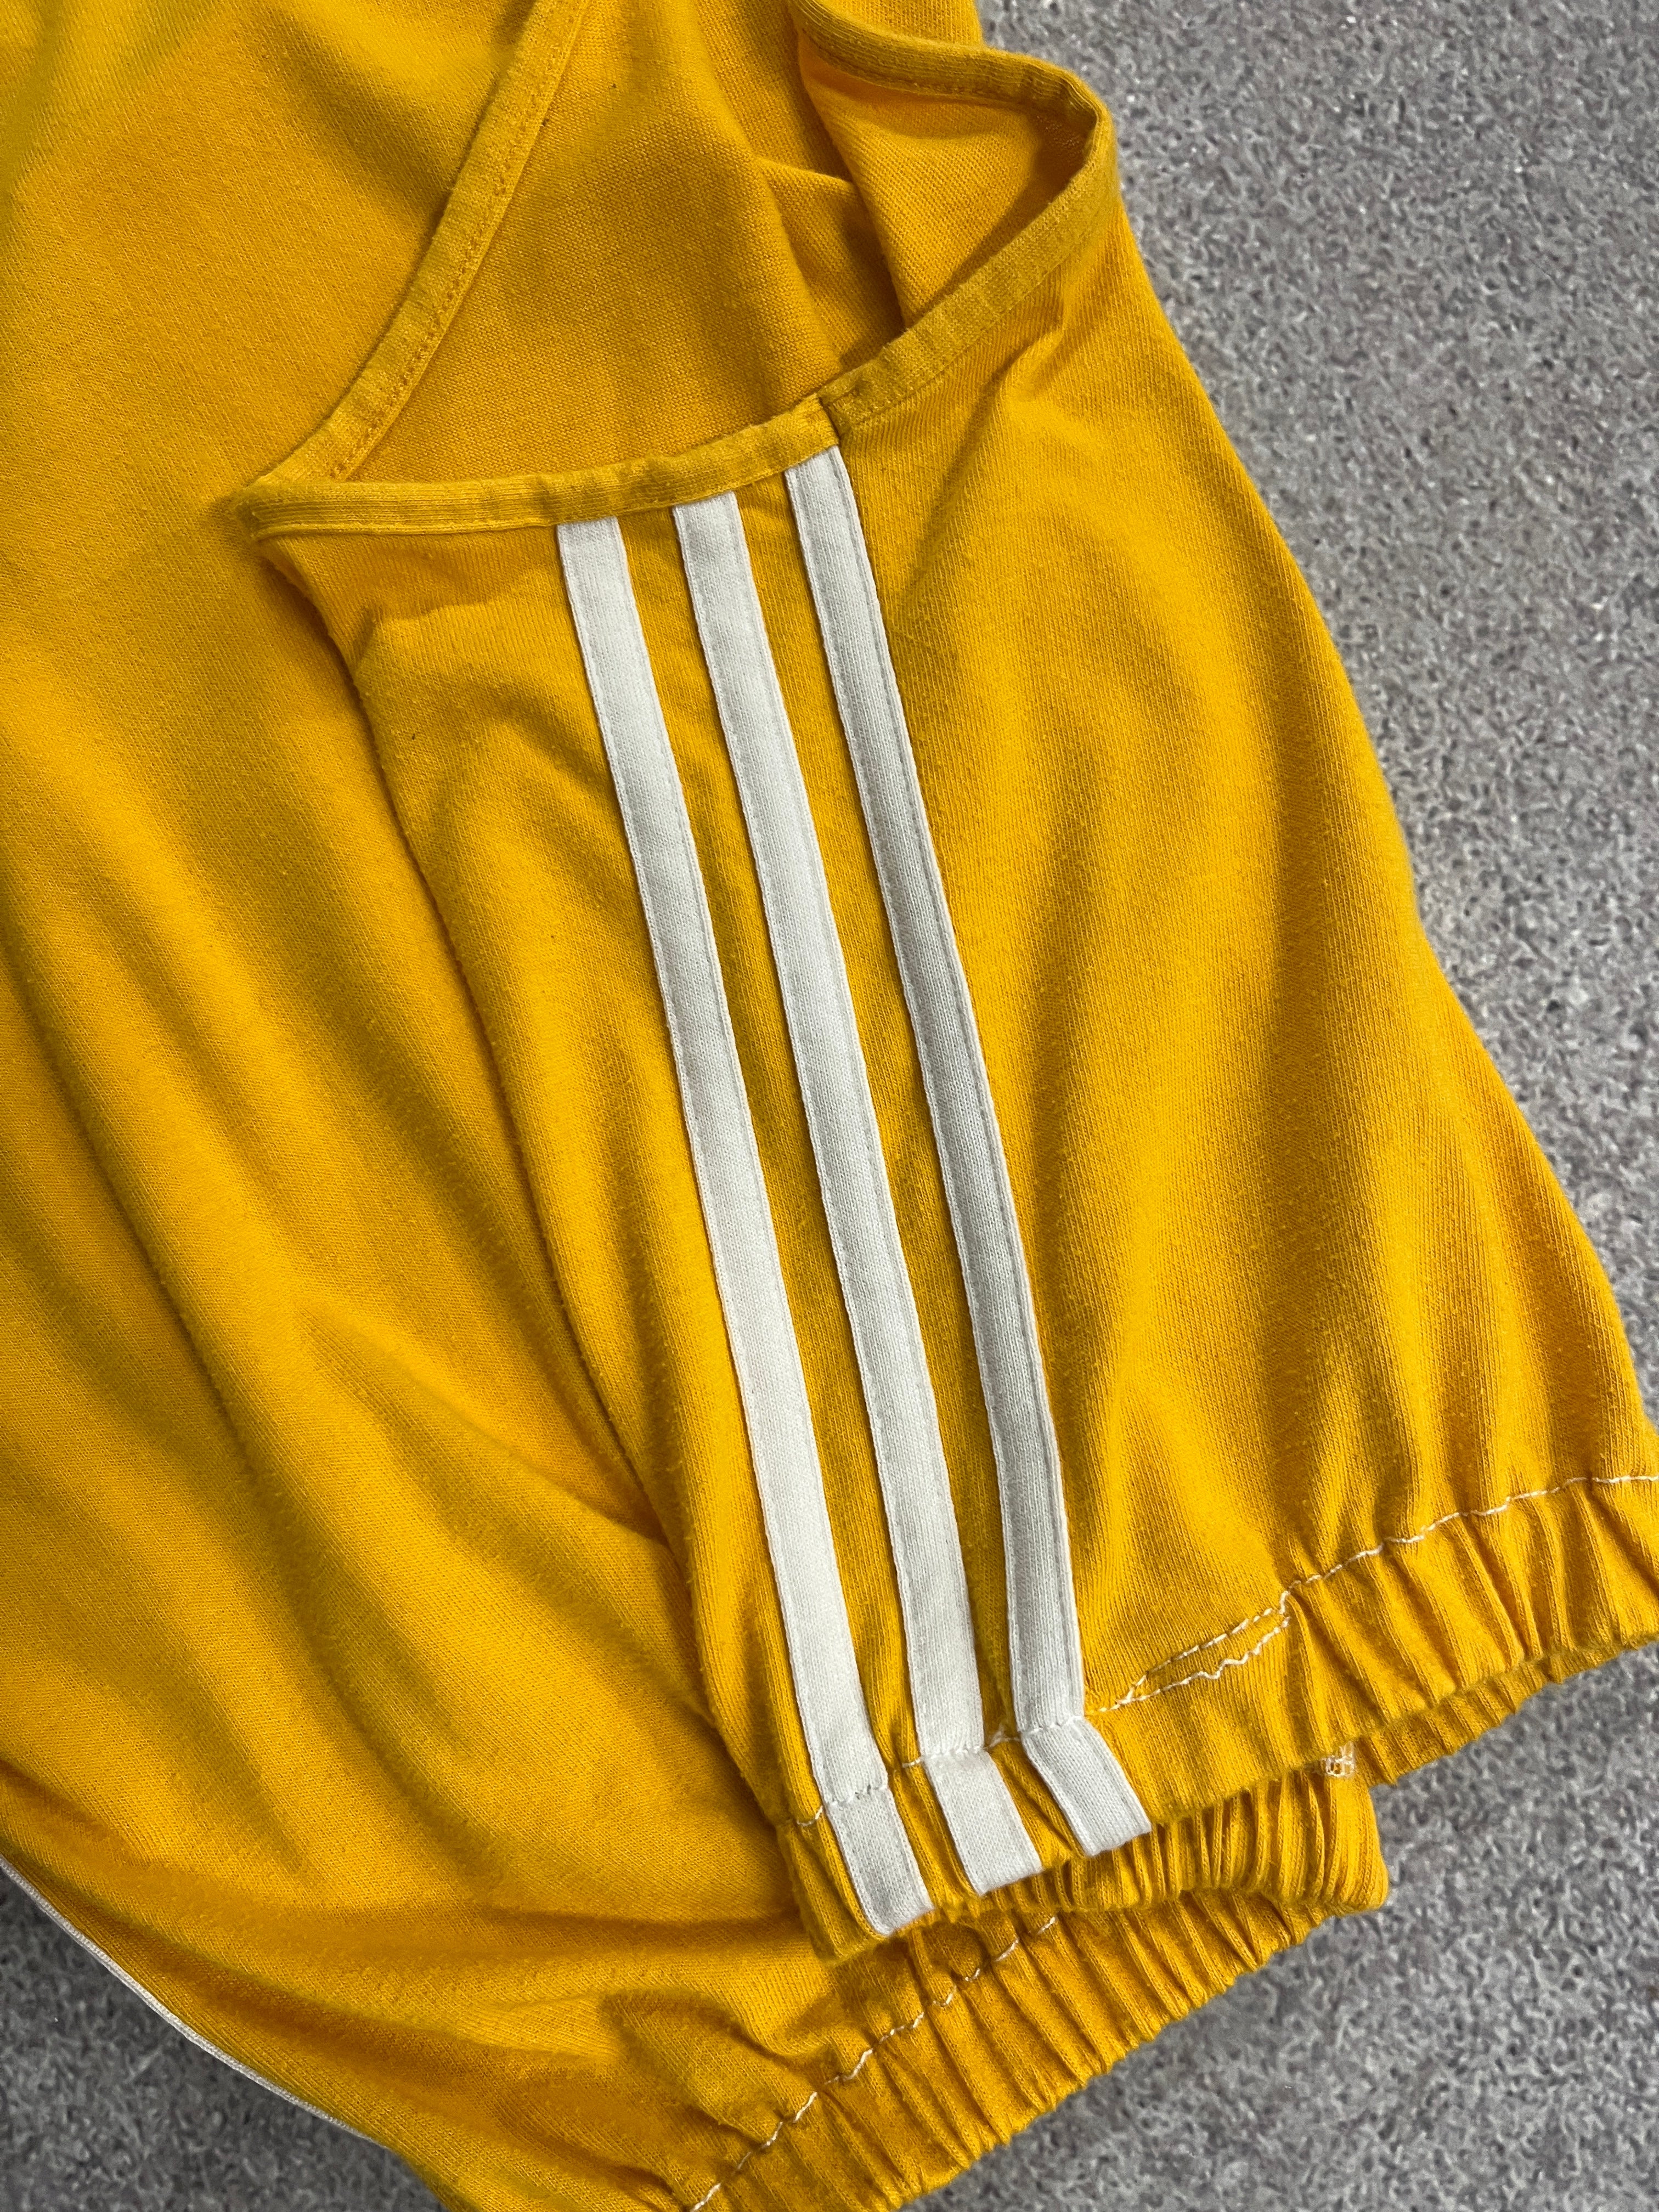 Vintage Adidas Cropped Top Yellow // Medium - RHAGHOUSE VINTAGE